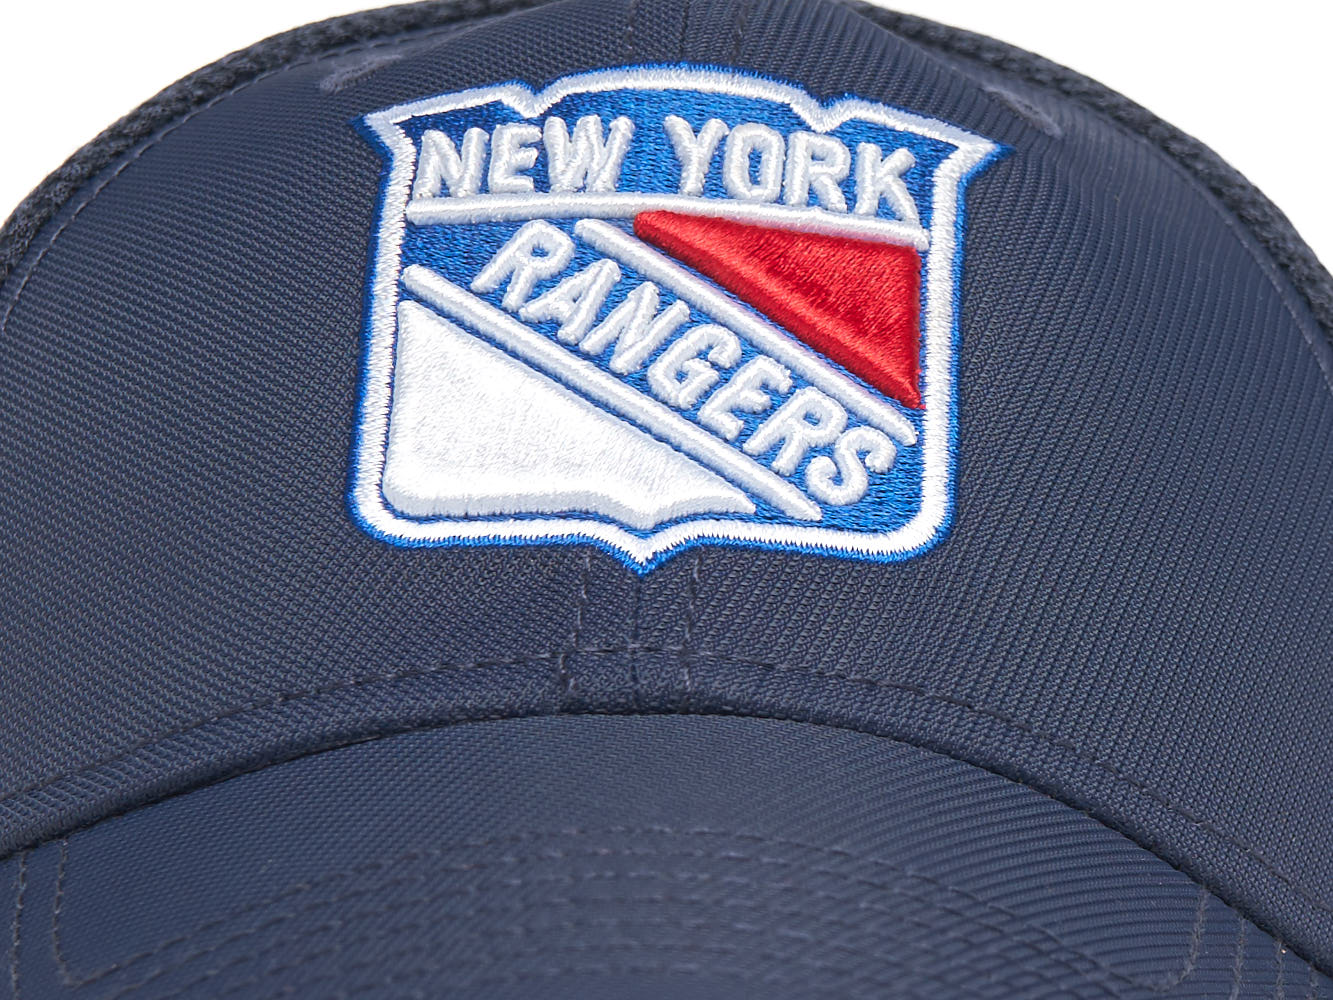  Atributika & club NHL New York Rangers 31373 SR